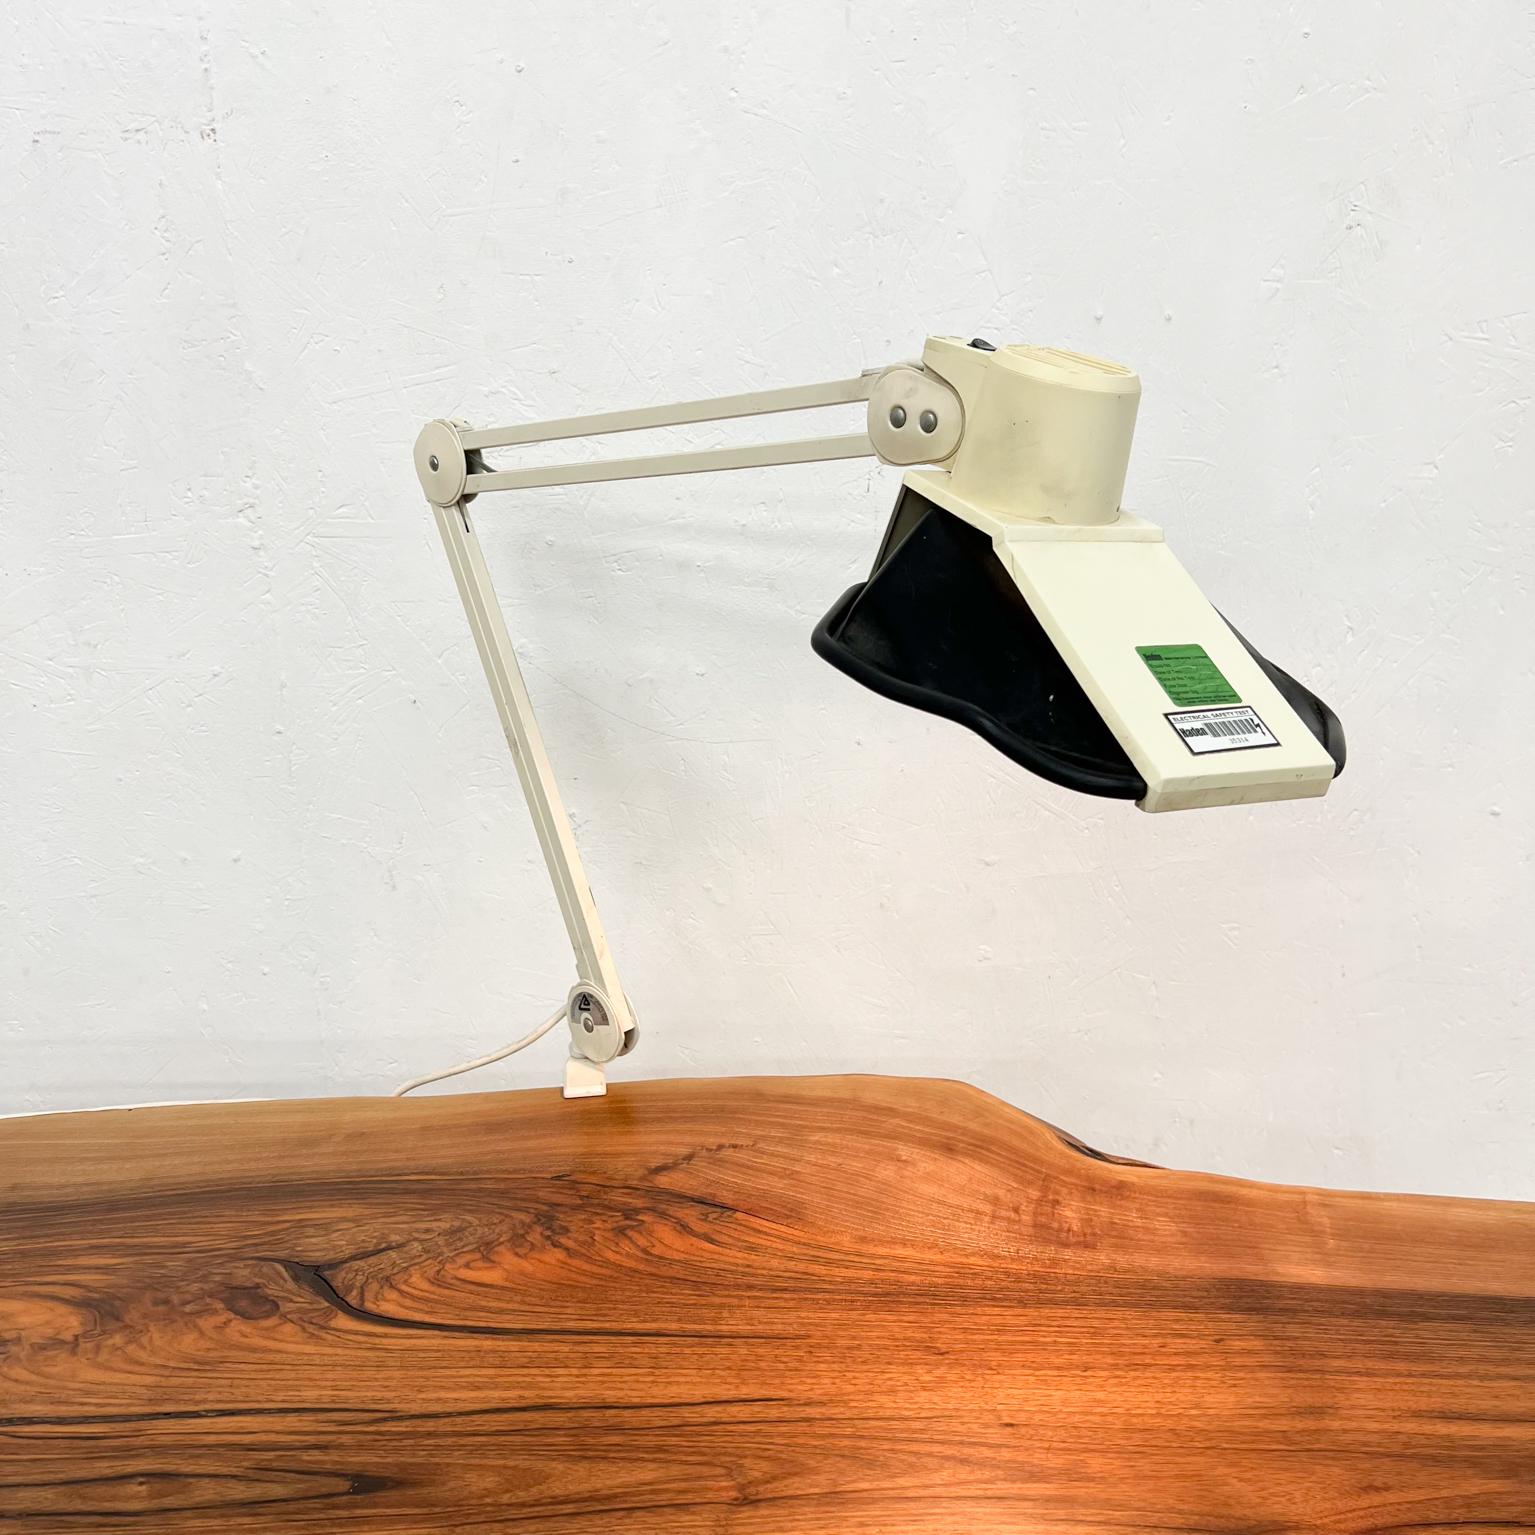 1970s LUXO Architect Rare Vintage Task Clamp Lamp for Desk Jac Jacobsen For Sale 7